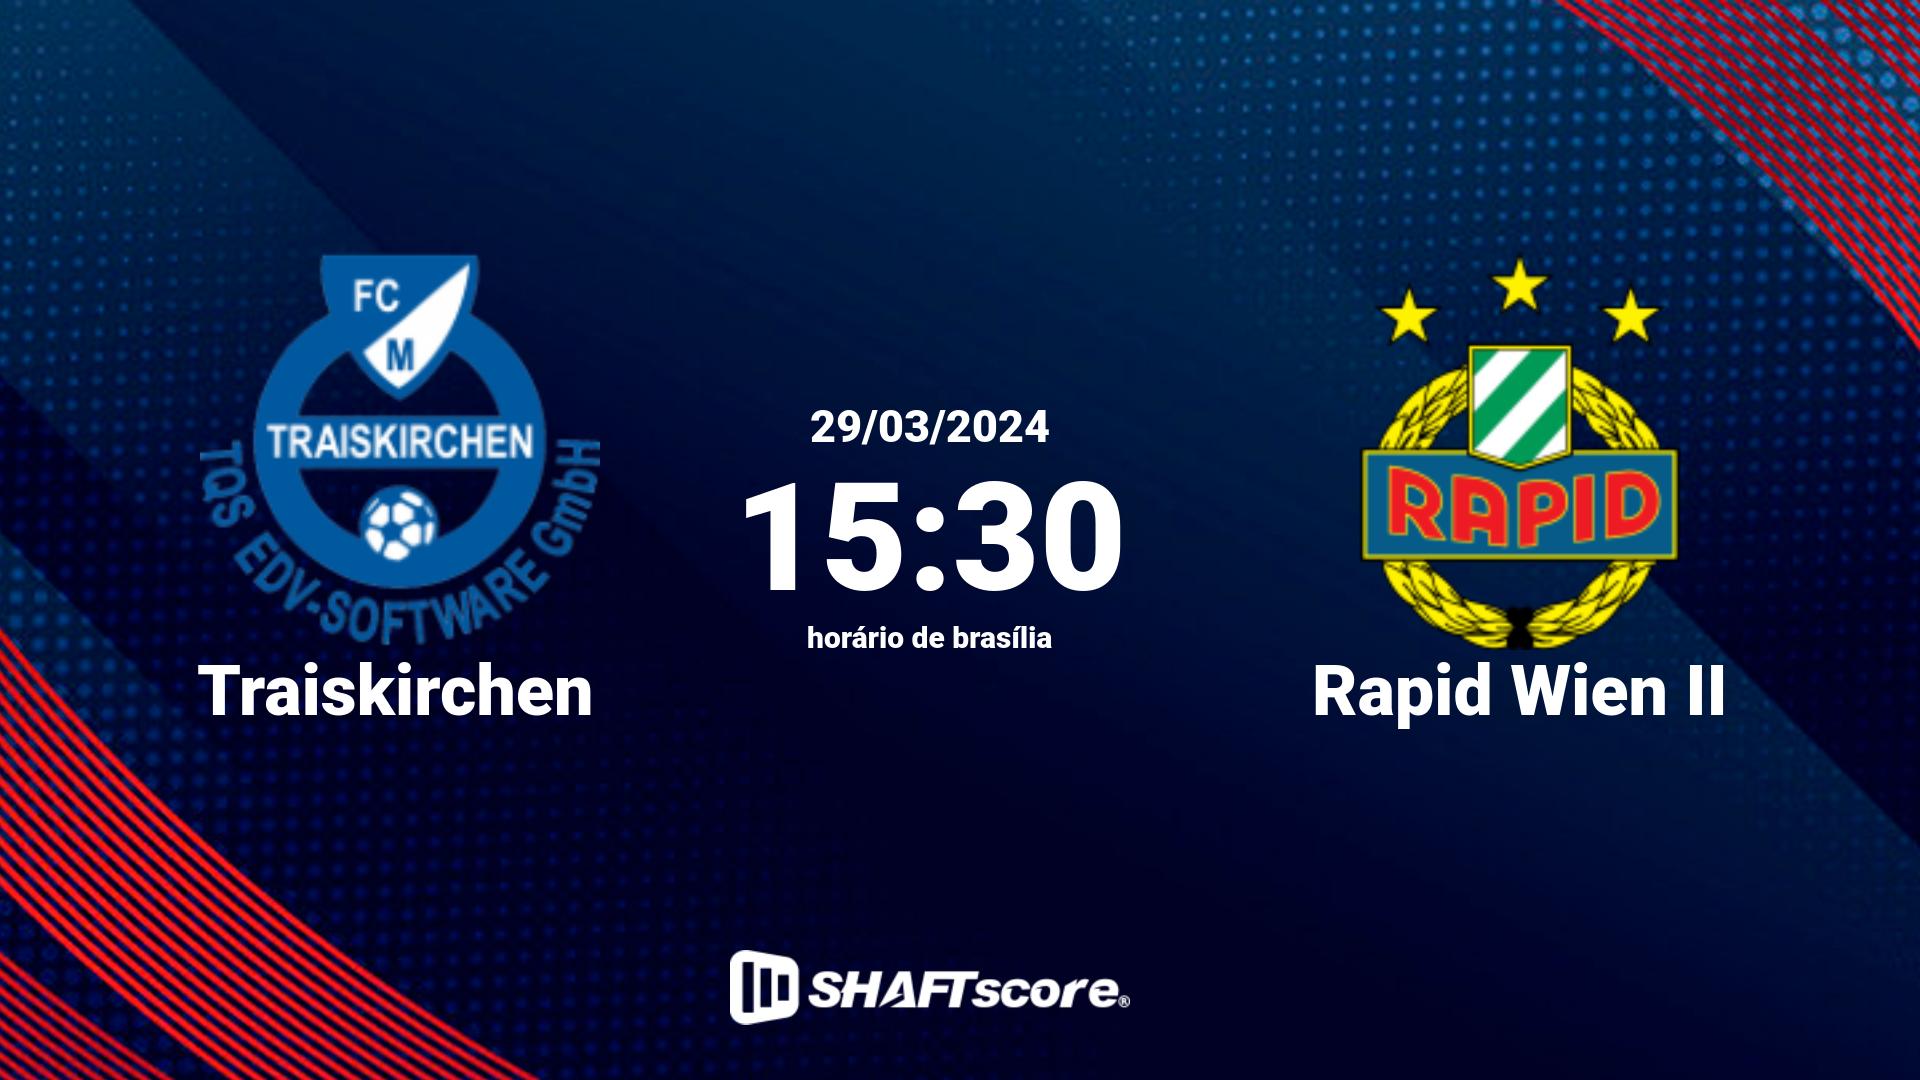 Estatísticas do jogo Traiskirchen vs Rapid Wien II 29.03 15:30